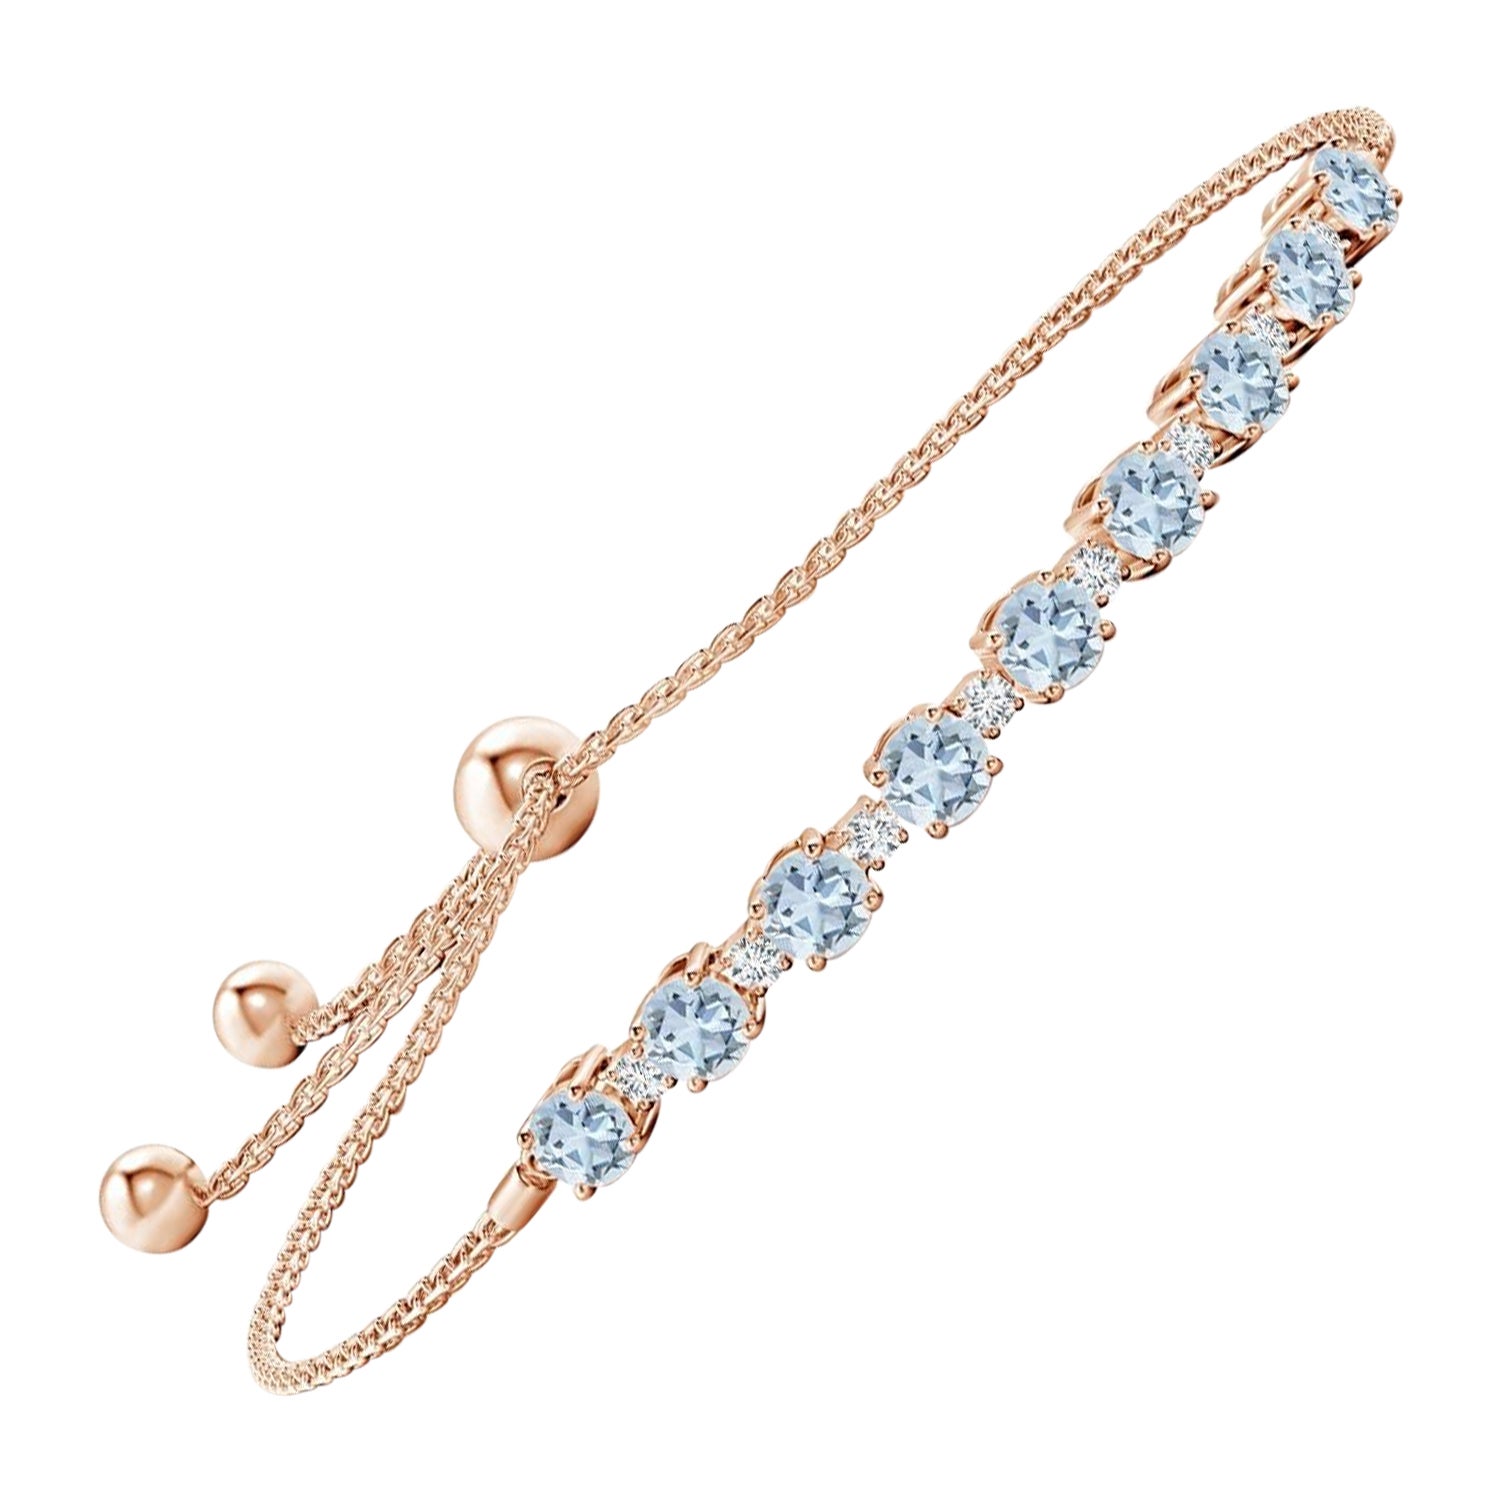 Natural 1.8ct Aquamarine and Diamond Tennis Bracelet in 14K Rose Gold For Sale